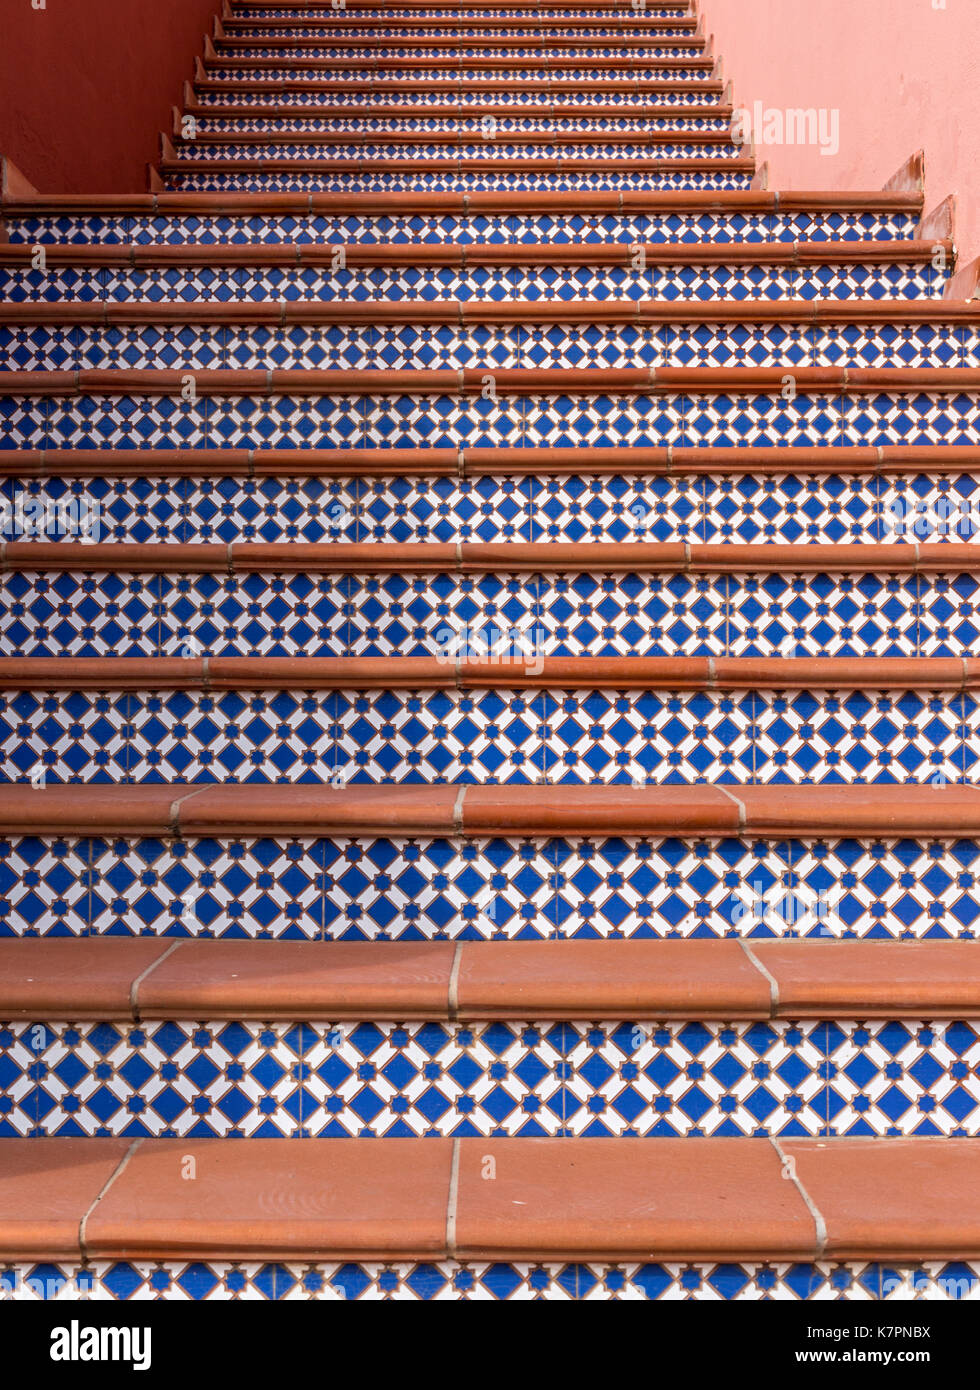 Pasos de terracota con baldosas azules y blancas. Foto de stock